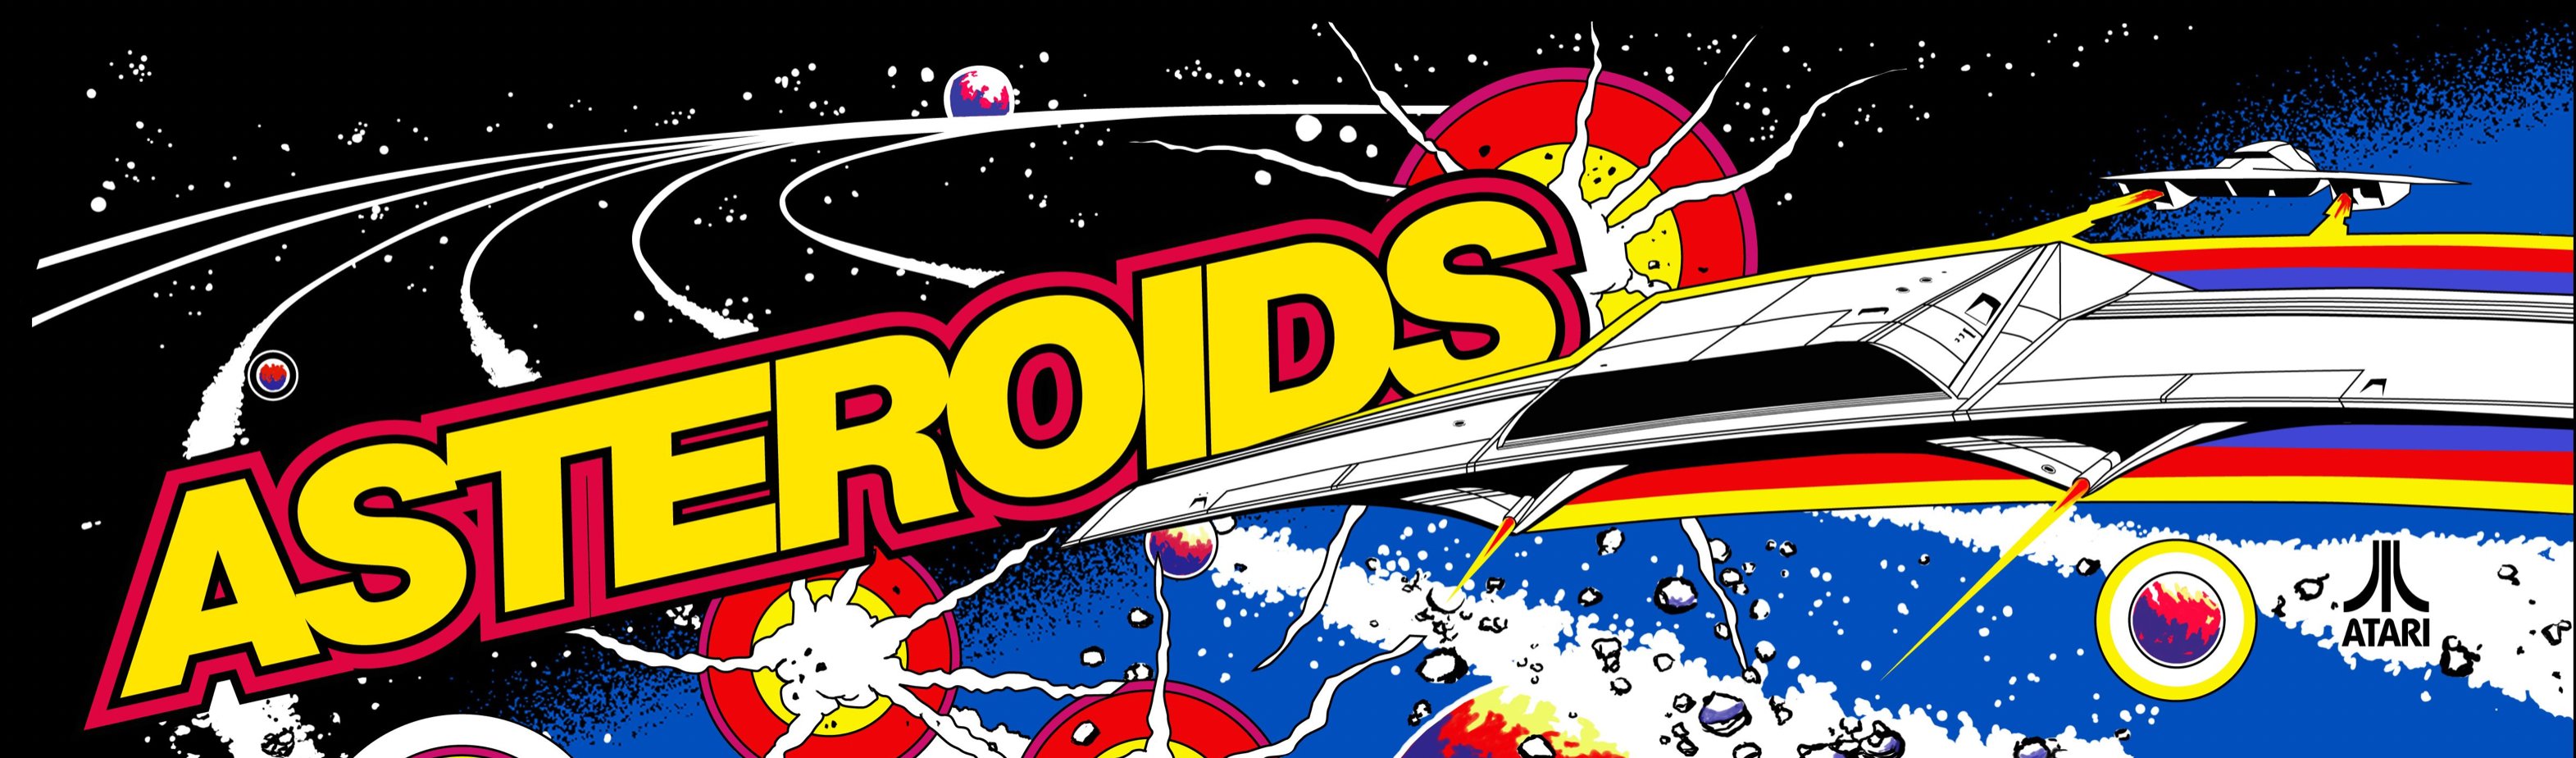 Asteroids (Marquee) (Museum RetroGames e. V. CC BY-NC-SA)